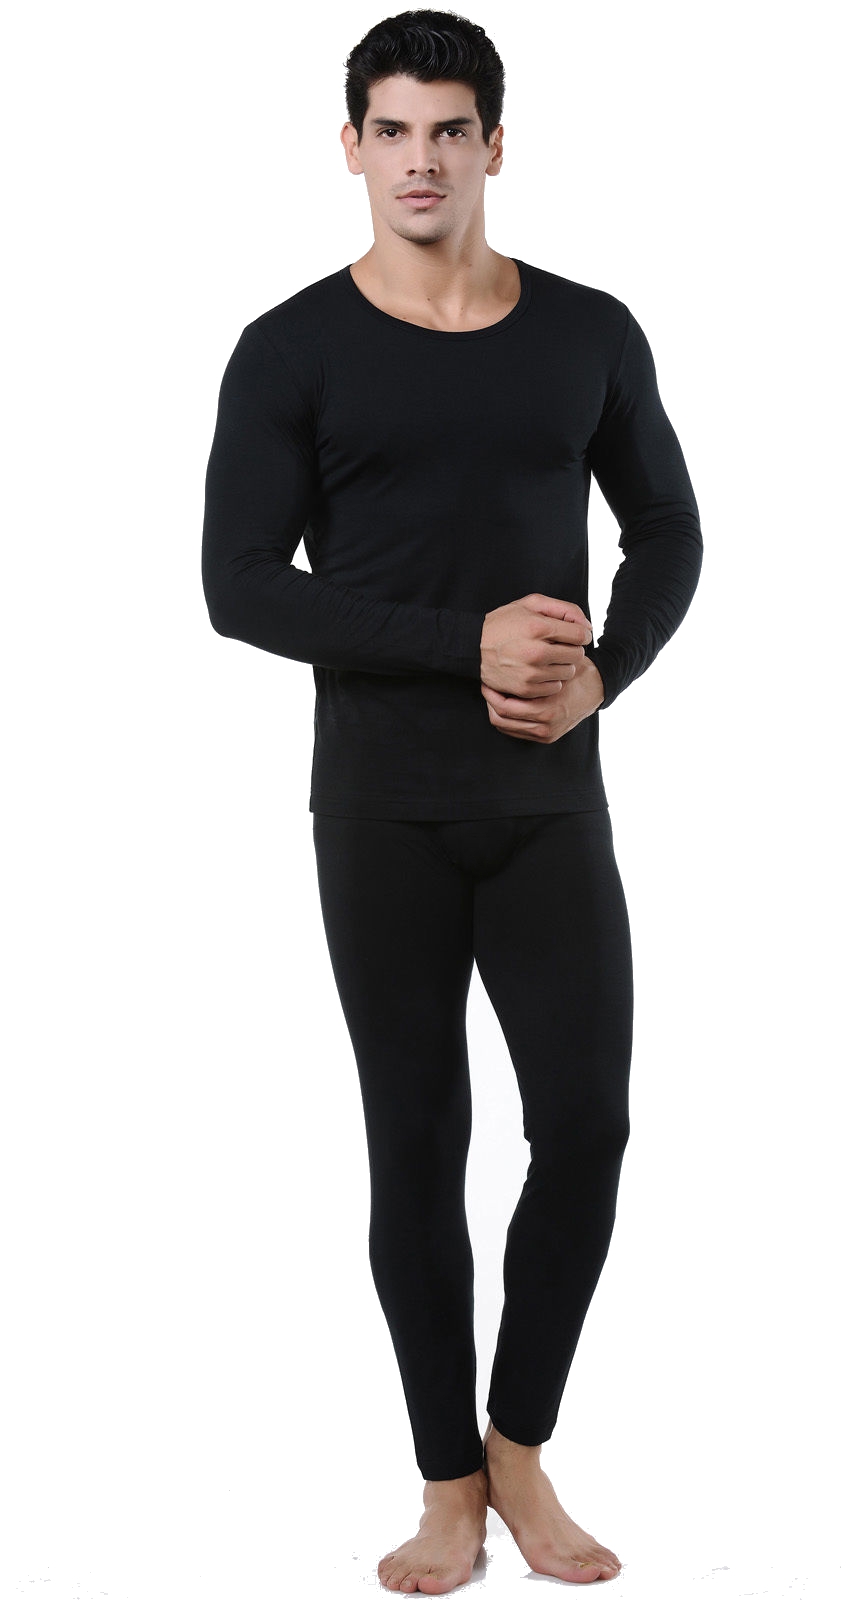 Men’s Ultra-Soft Tagless Fleece Lined Thermal Top & Bottom Underwear Set, Black, Large - image 2 of 5